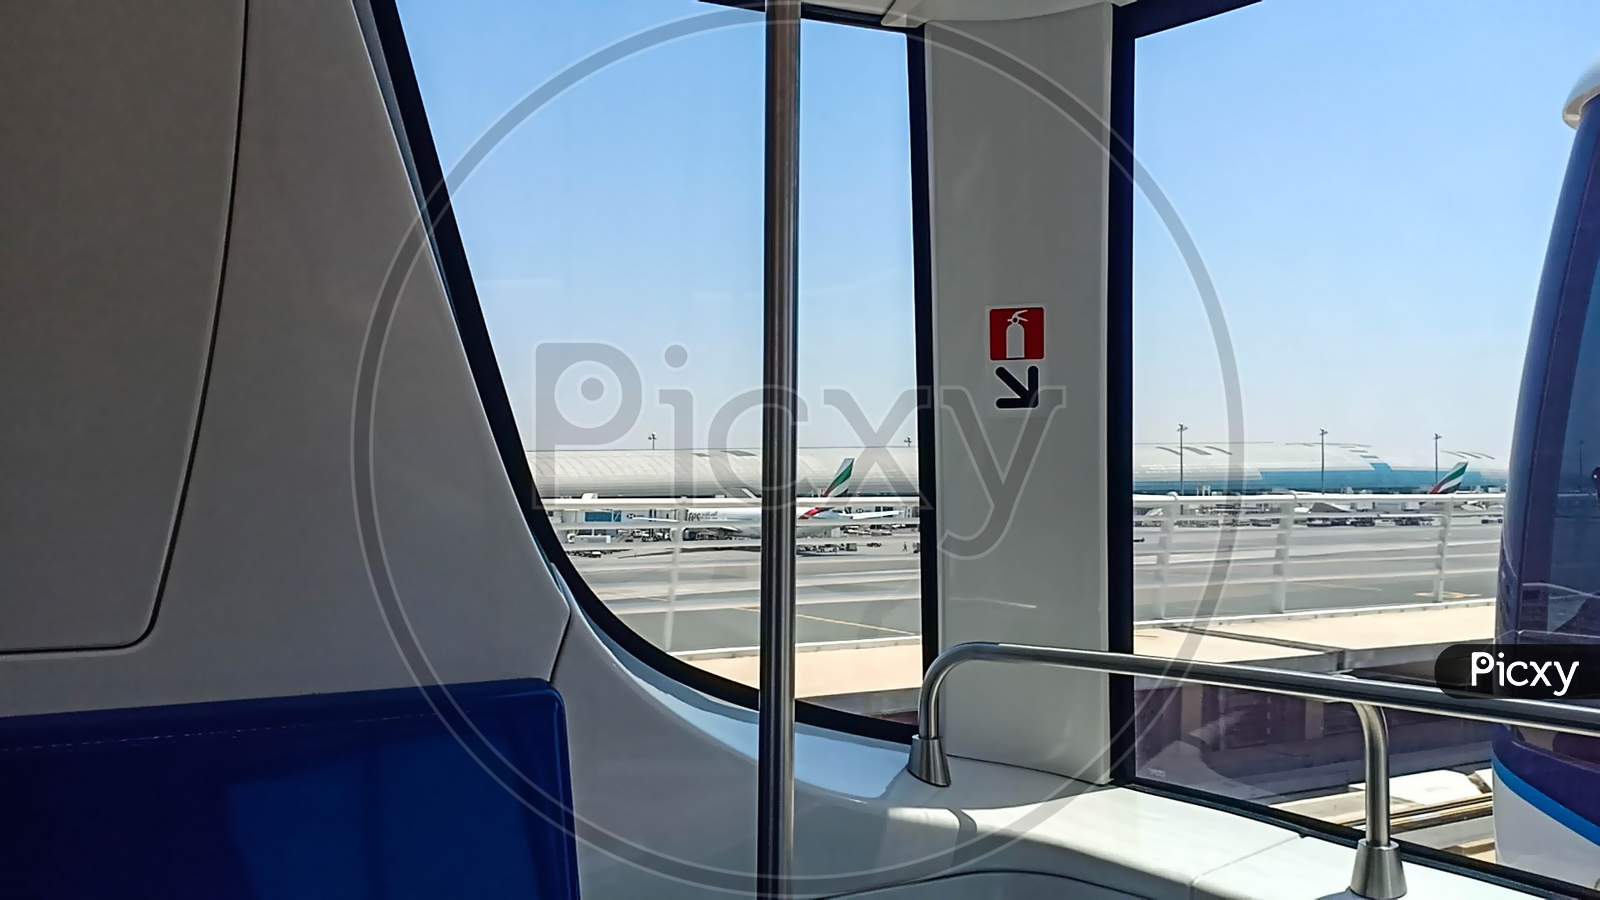 Dubai airport metro